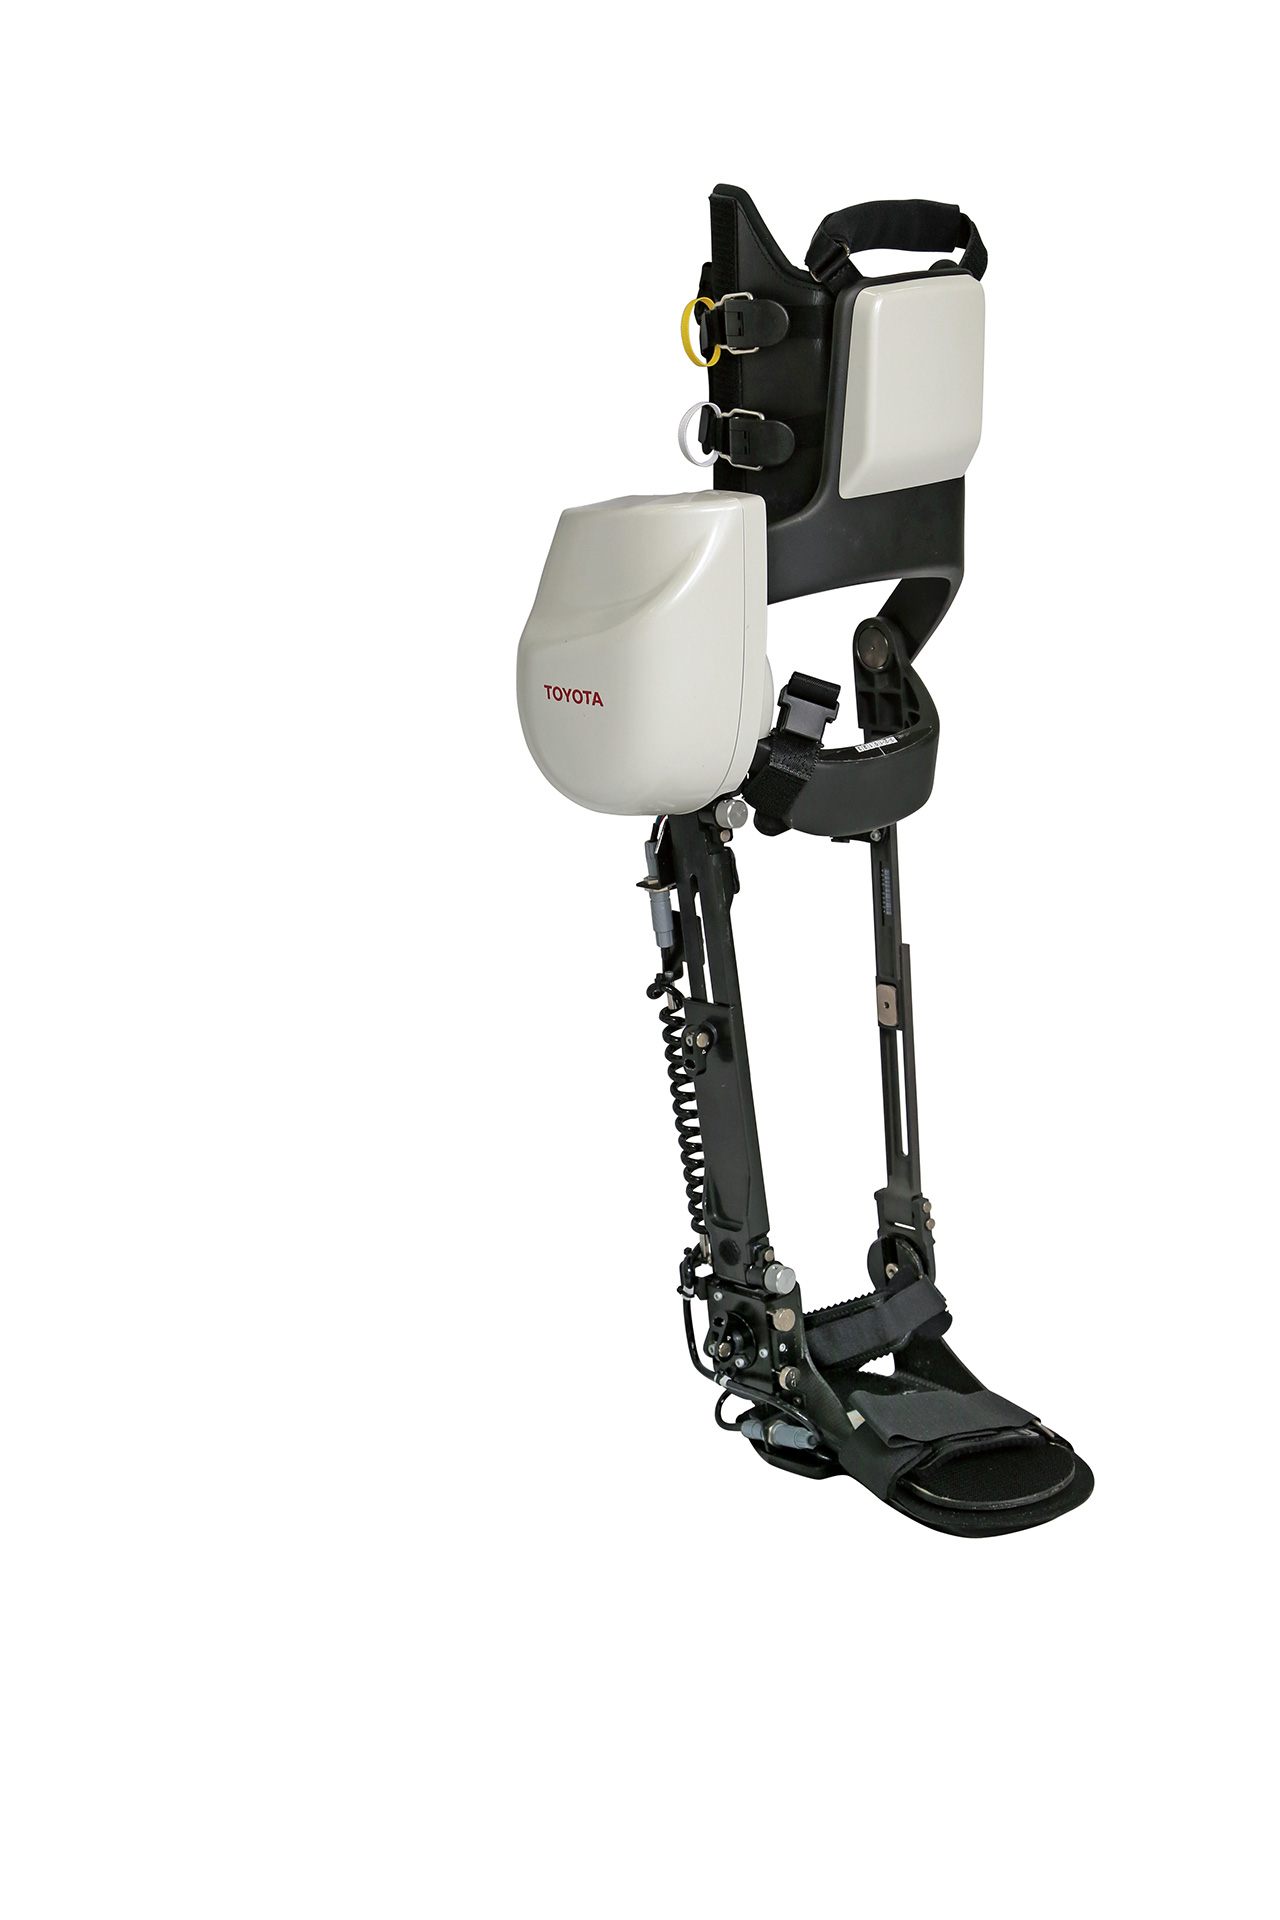 Welwalk WW-1000 robotic leg